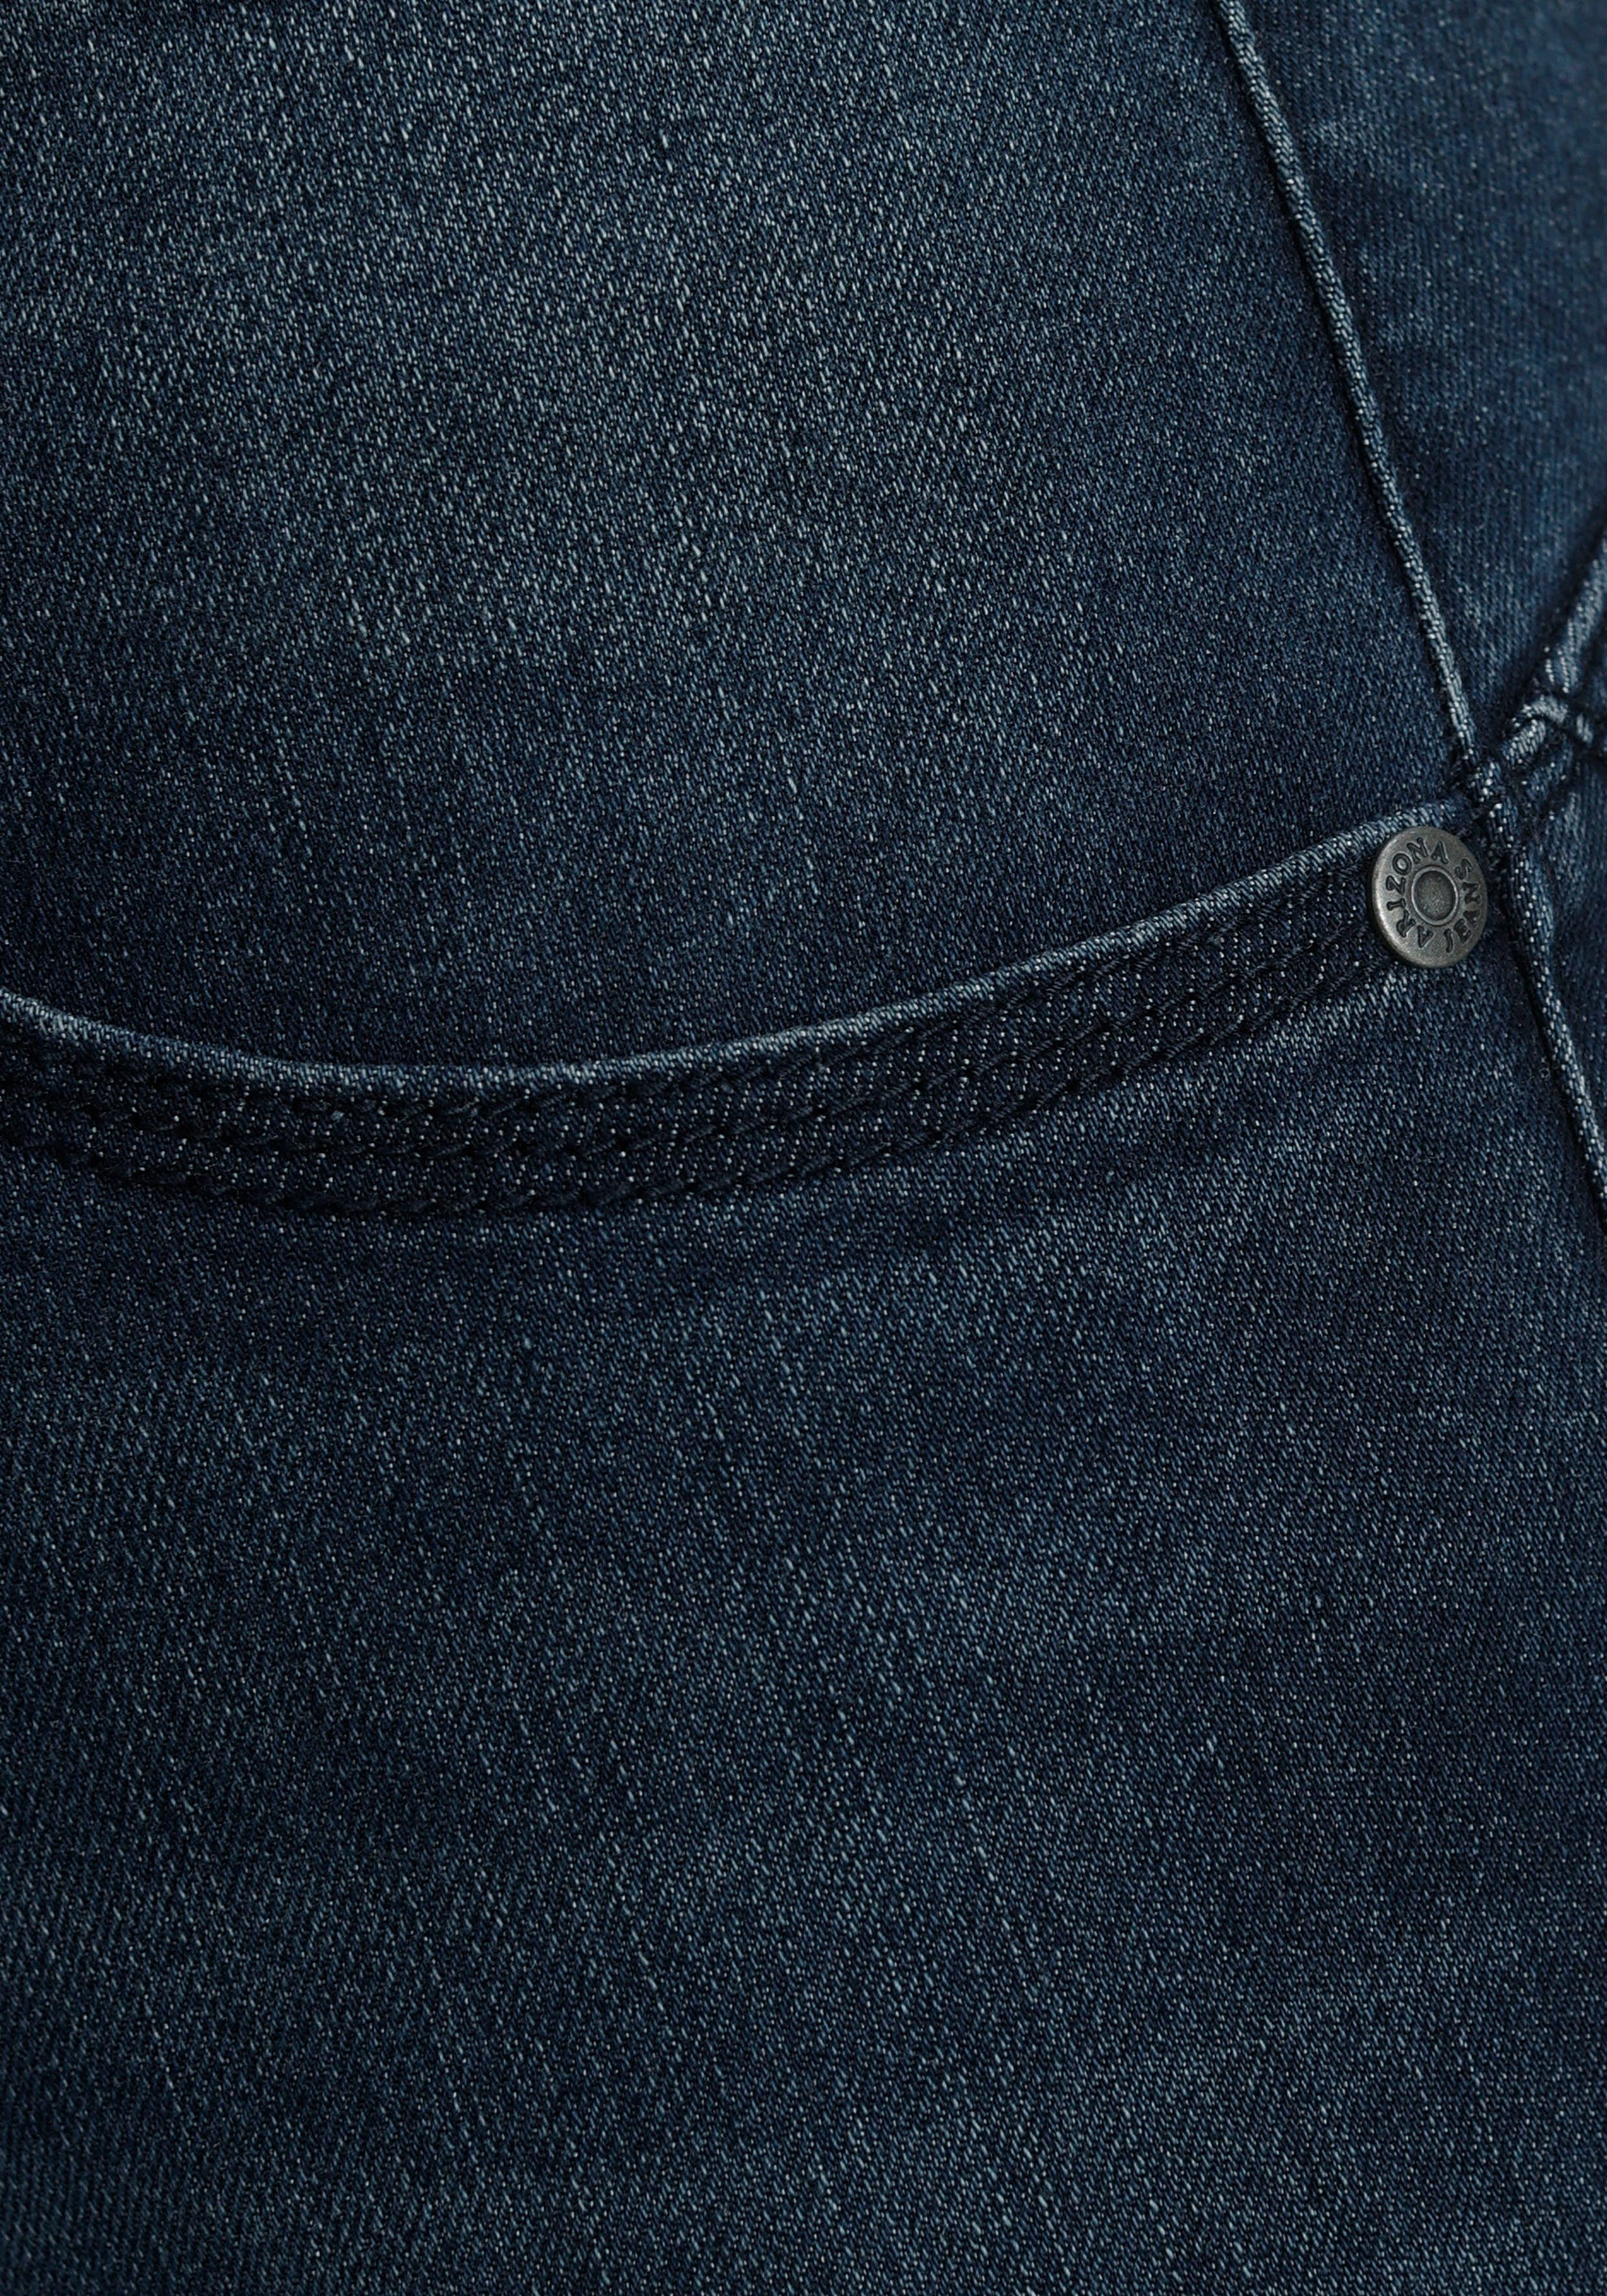 Arizona Skinny-fit-Jeans Shaping Mid Waist darkblue-used